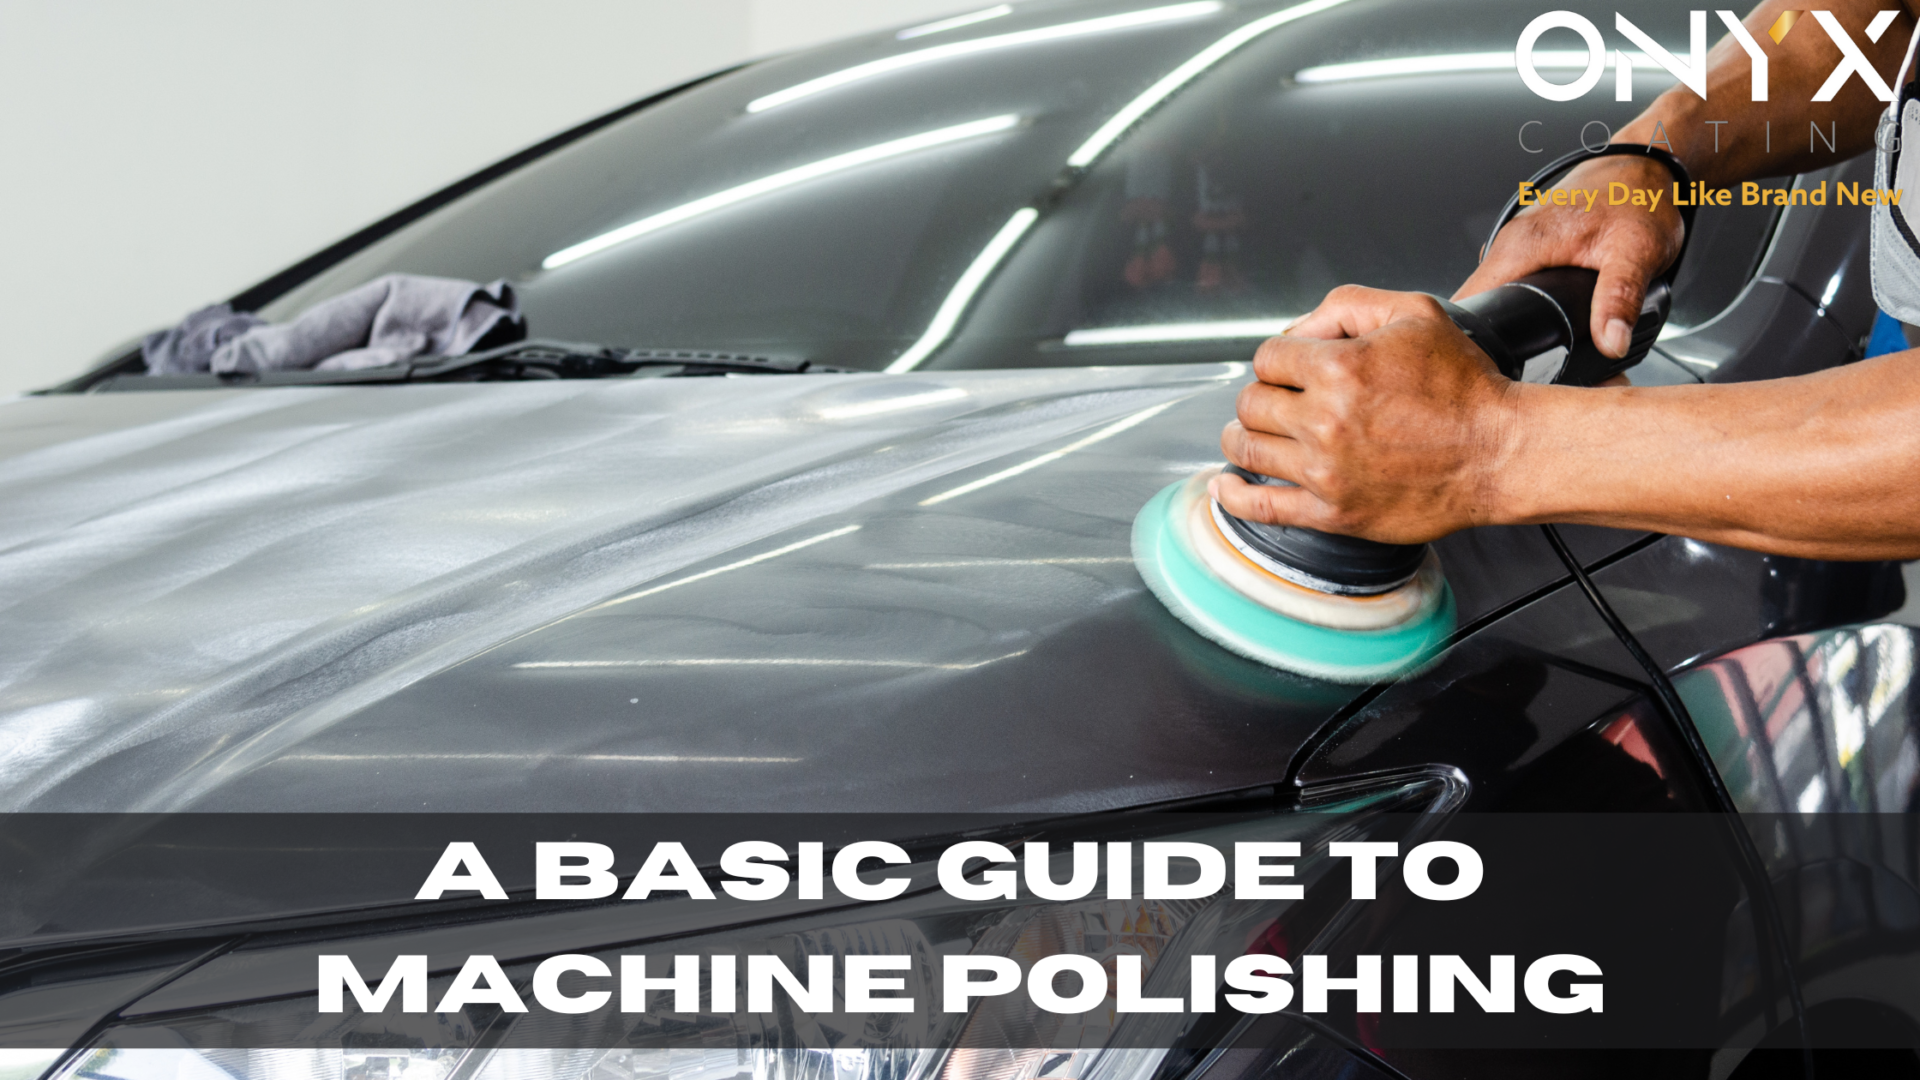 A BASIC GUIDE TO MACHINE POLISHING